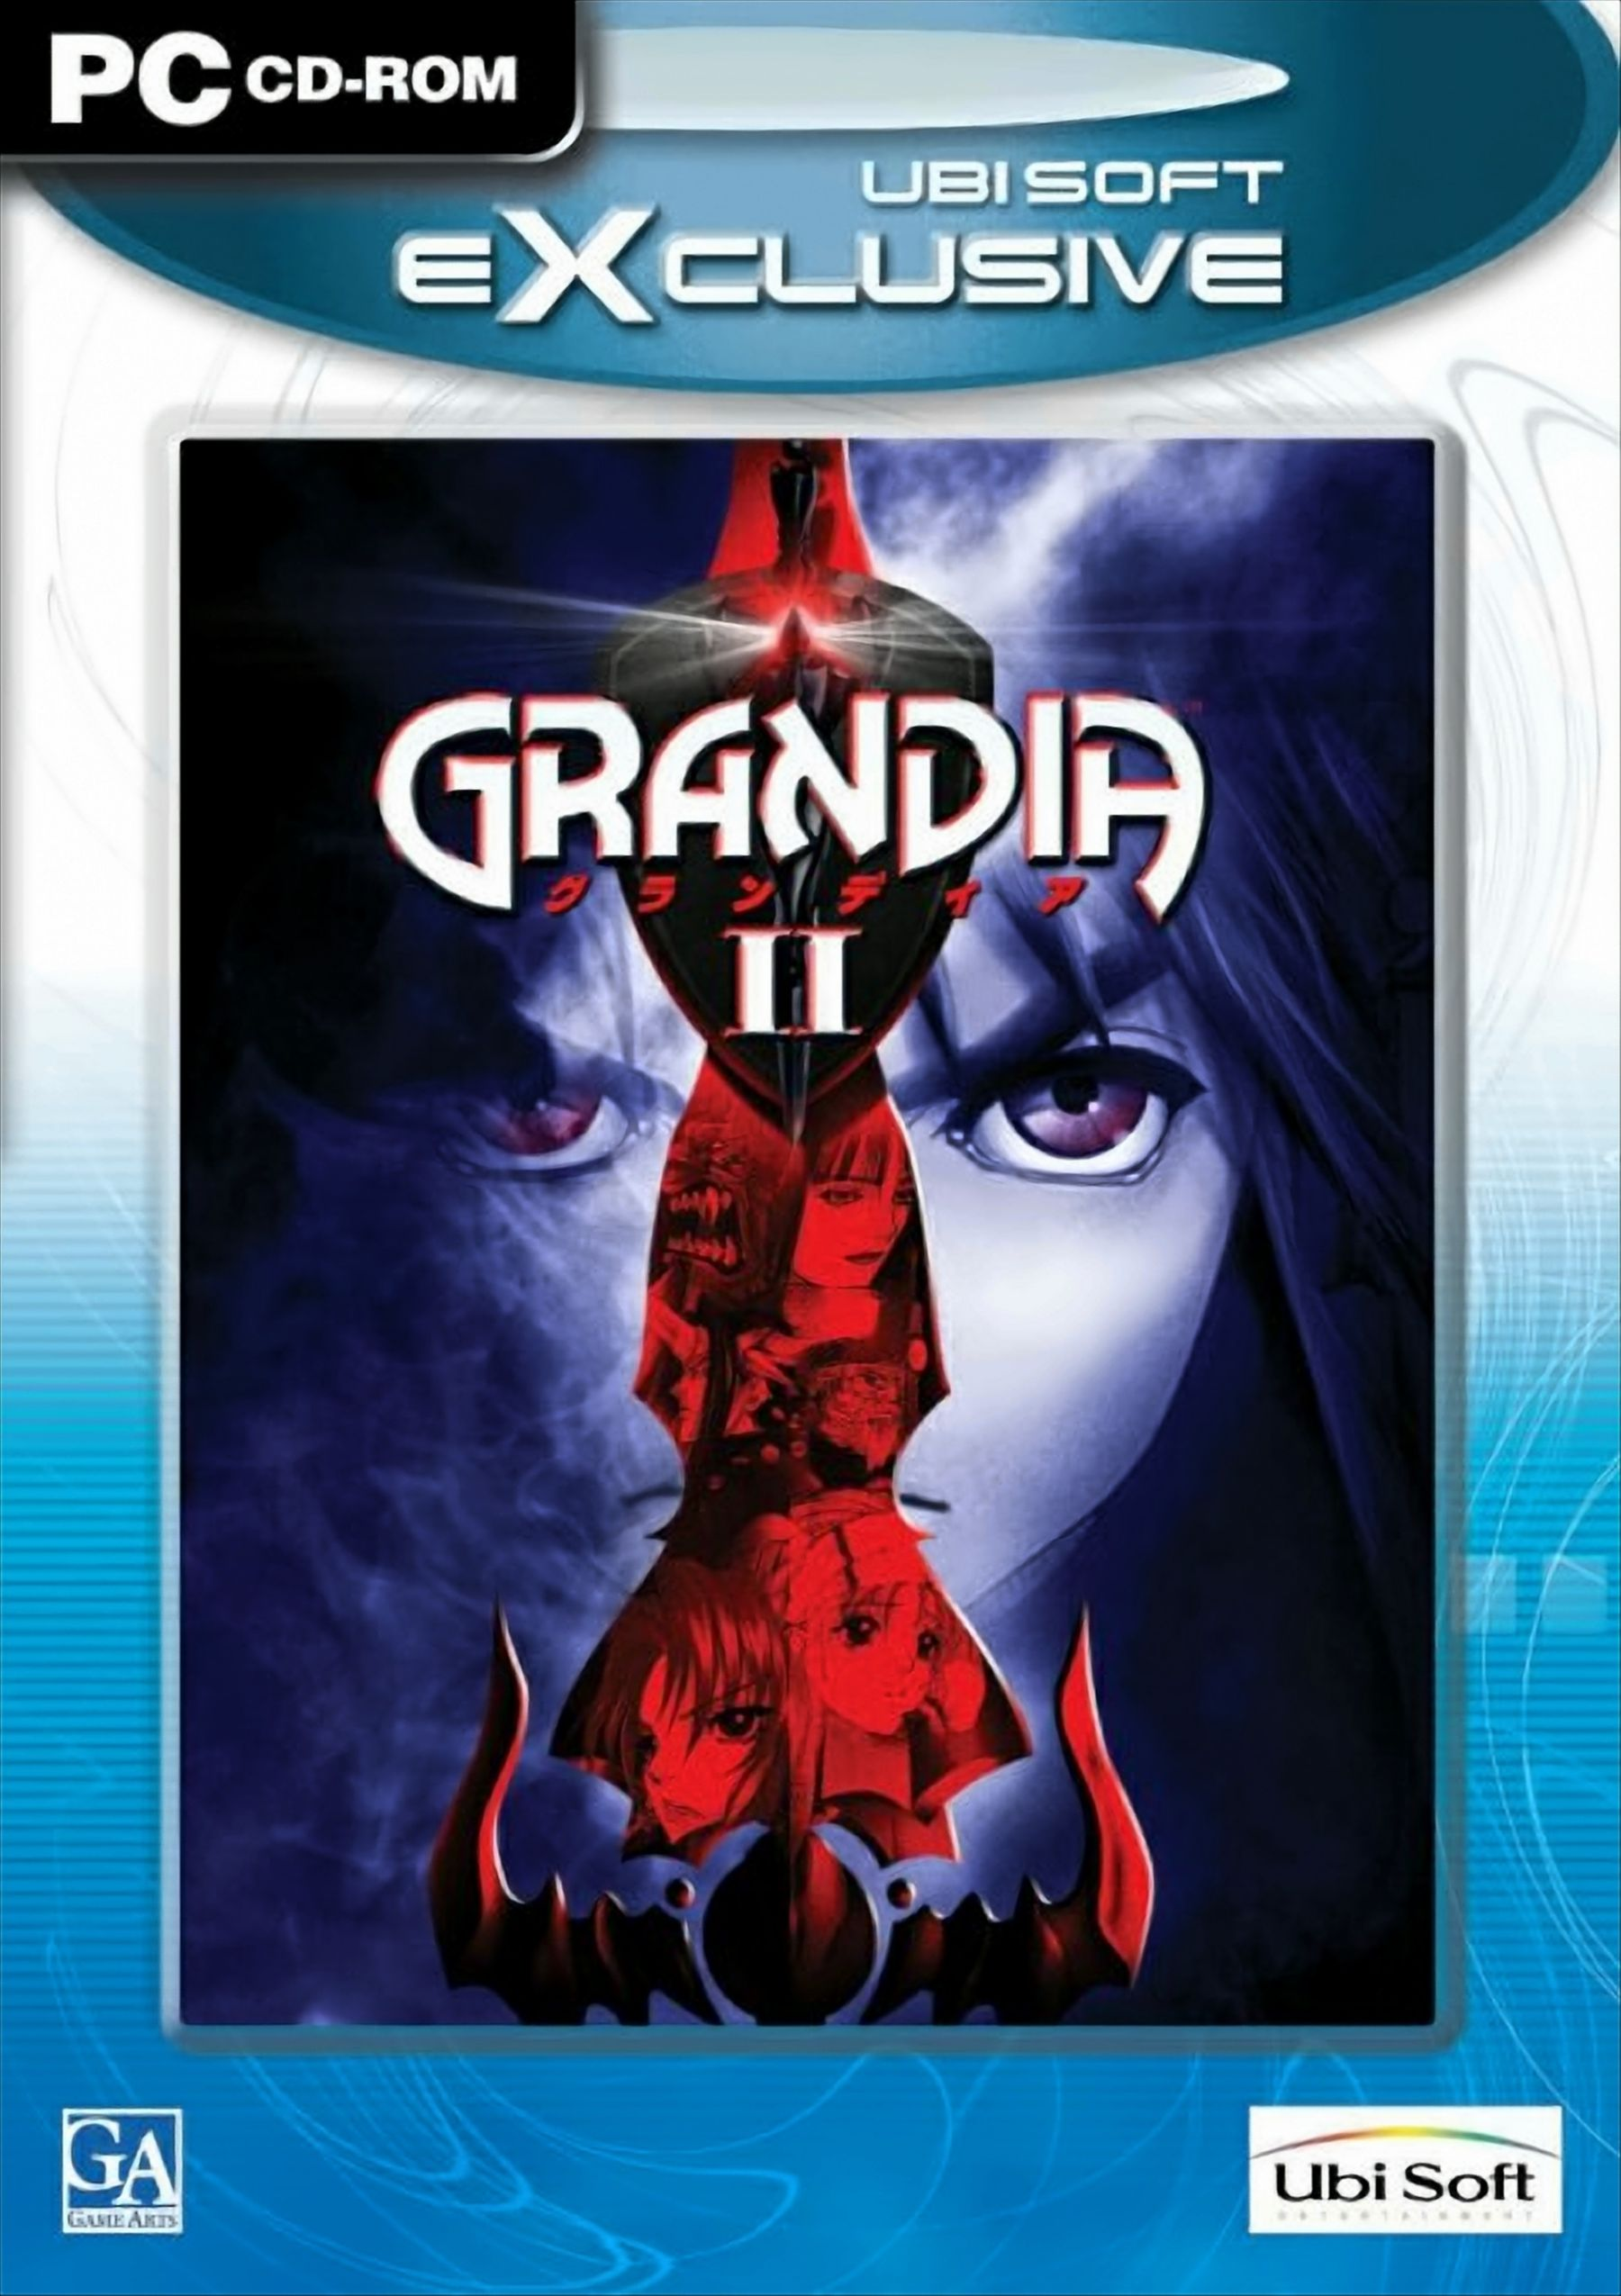 [PC] Grandia - II